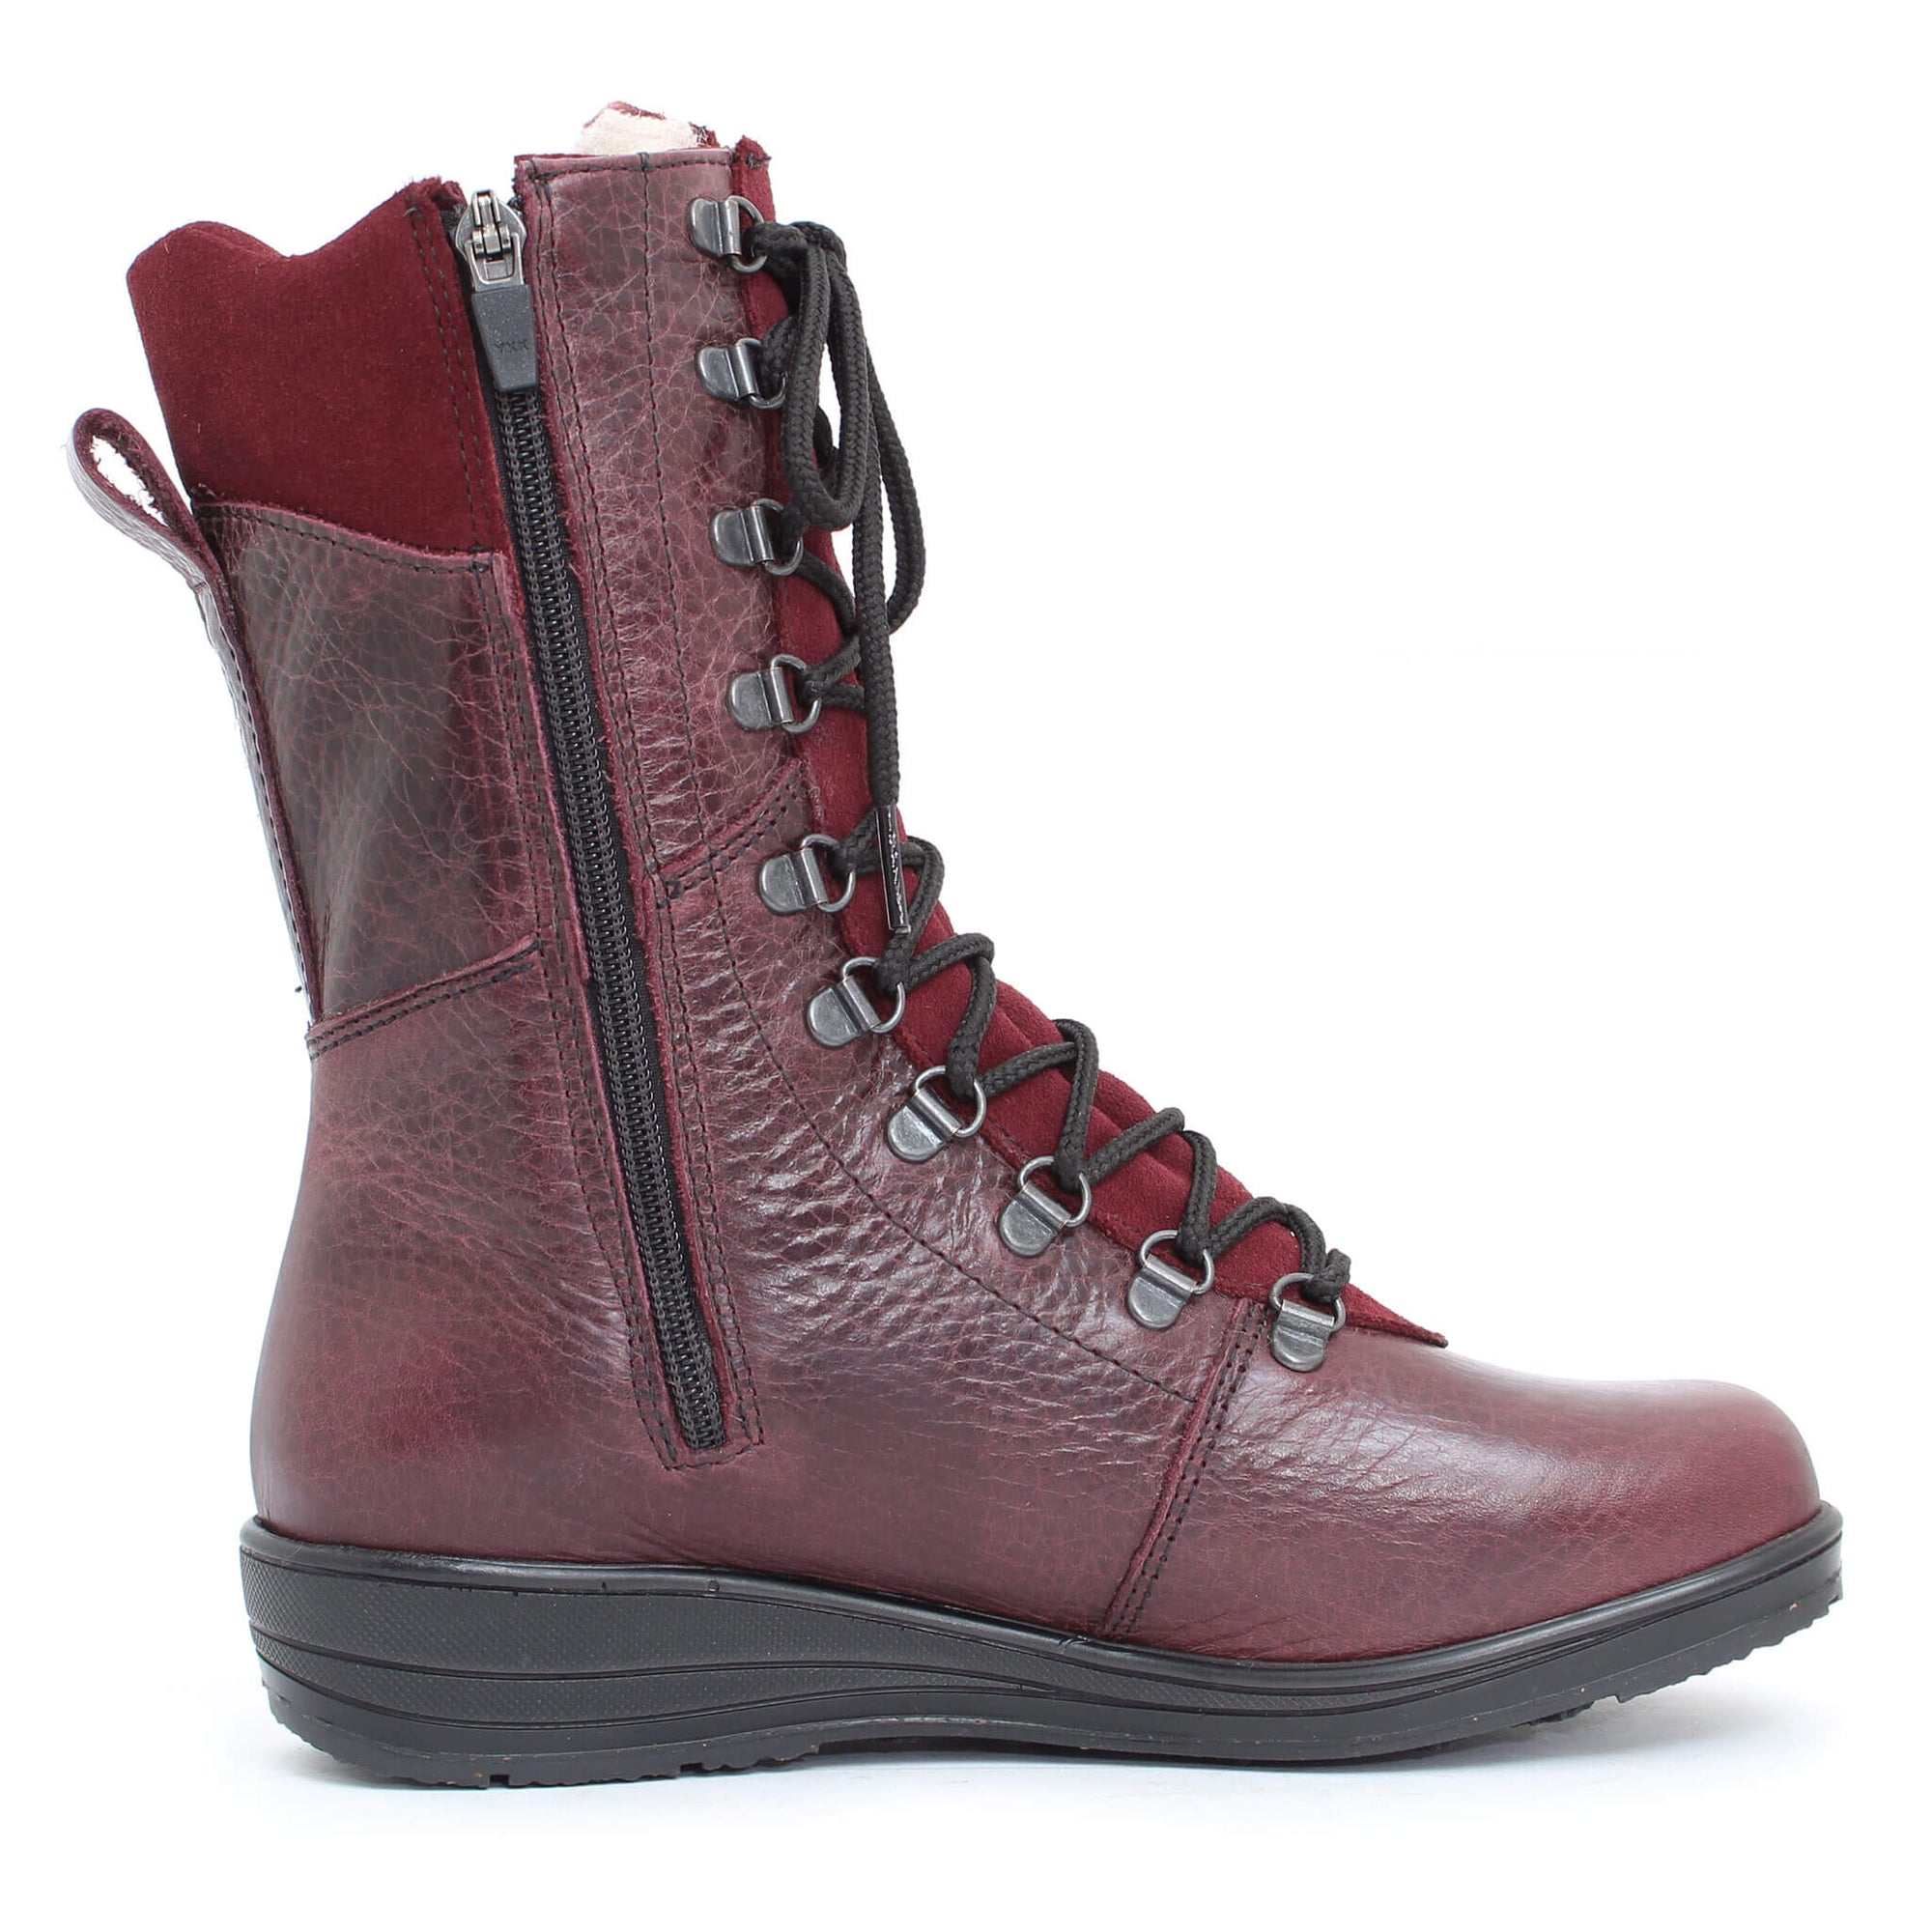 Banff winter boot for women - Black-Red